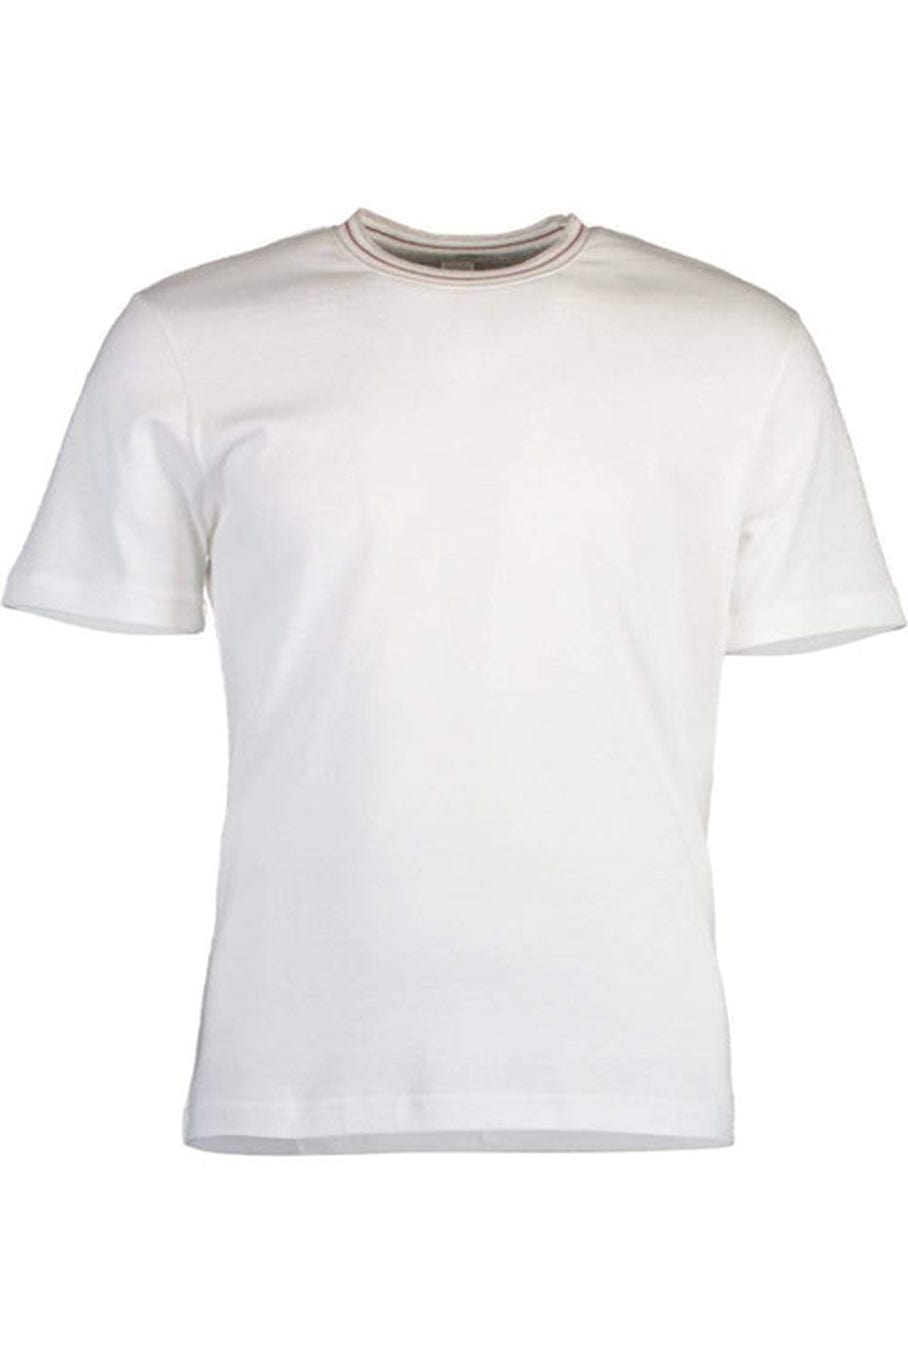 Bianco Round Neck Triangle Stitch T-Shirt MENSCLOTHINGTEE ELEVENTY   